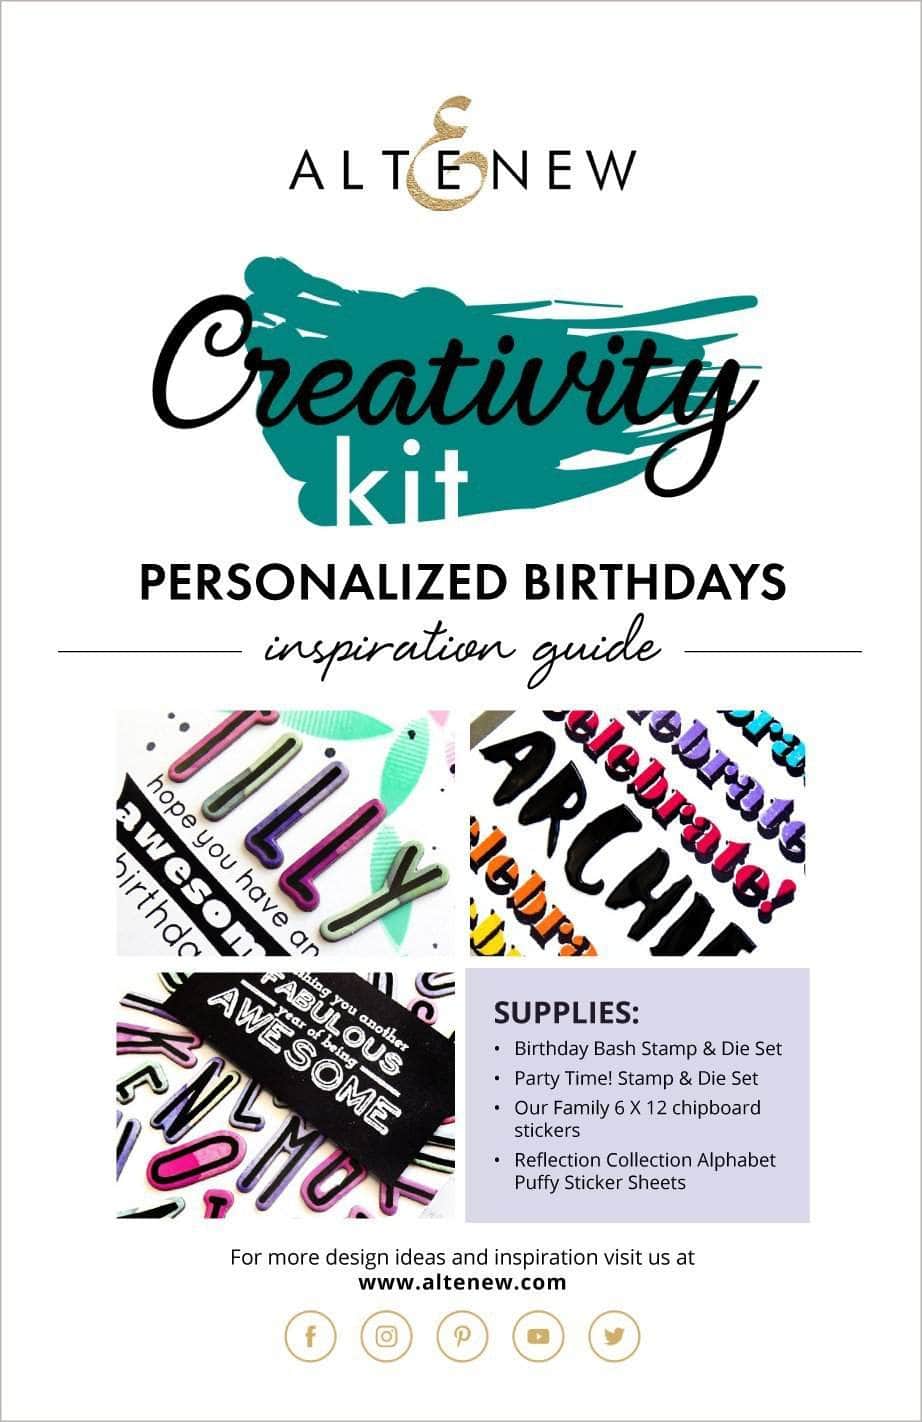 Printed Media Personalized Birthdays Creativity Kit Inspiration Guide